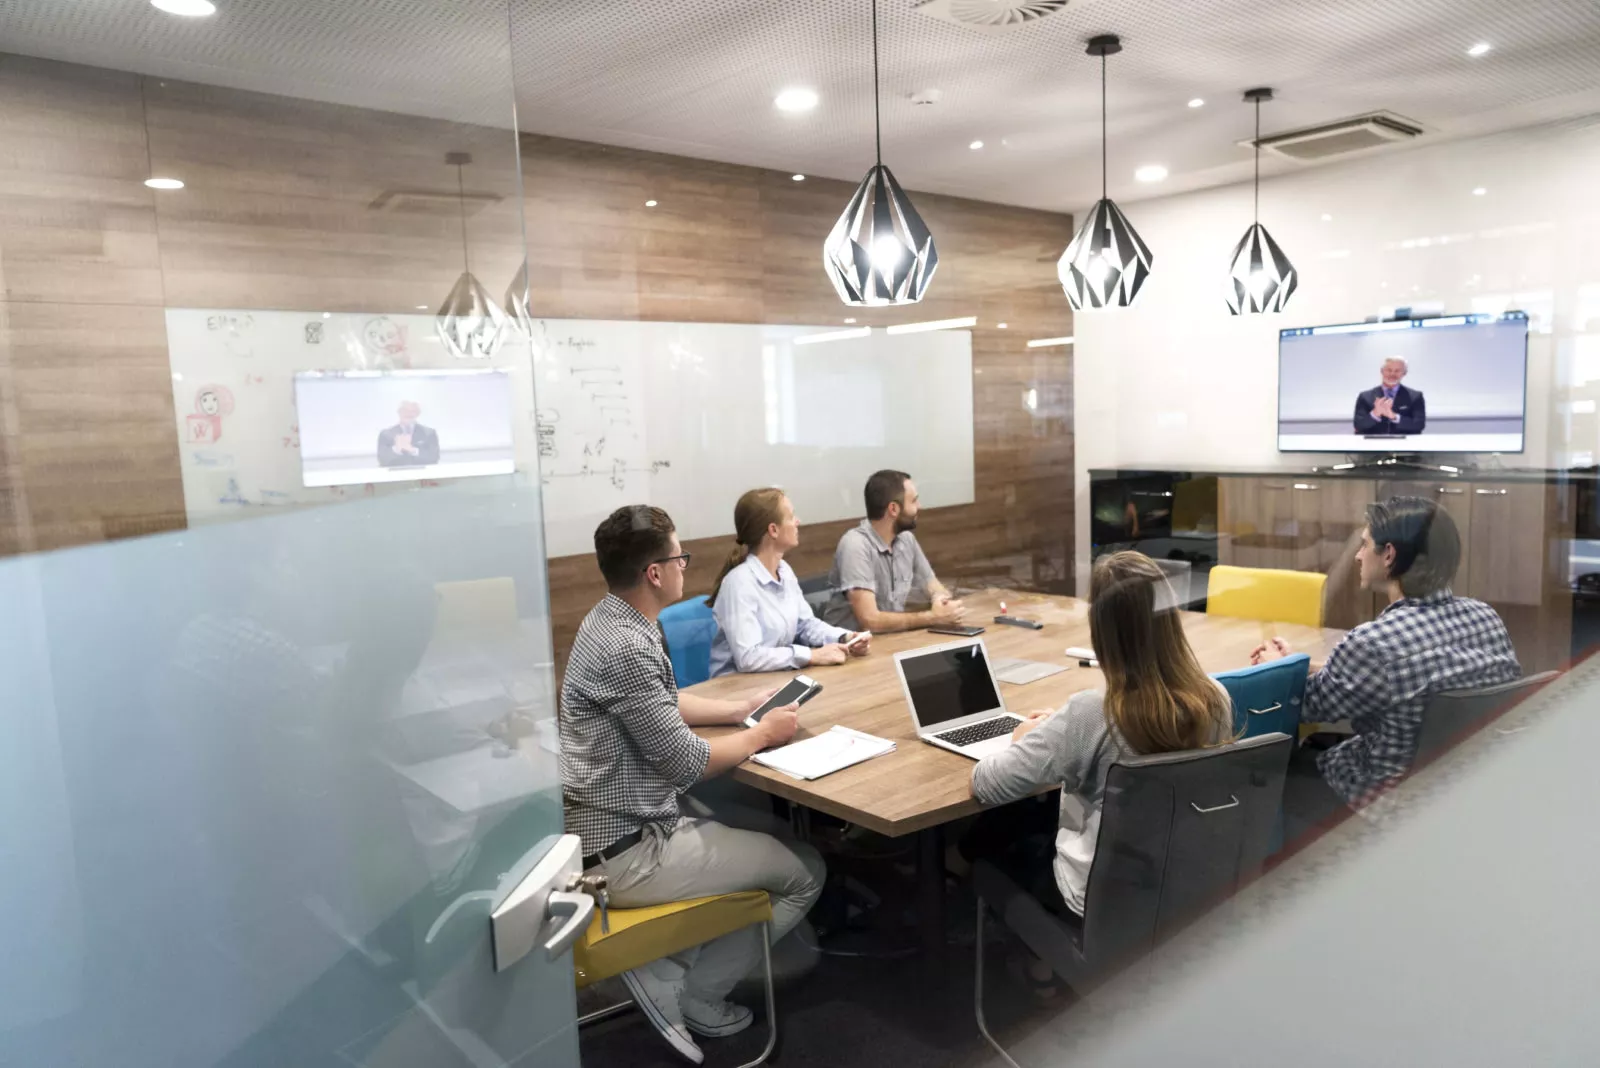 A hybrid office meeting using digital technology